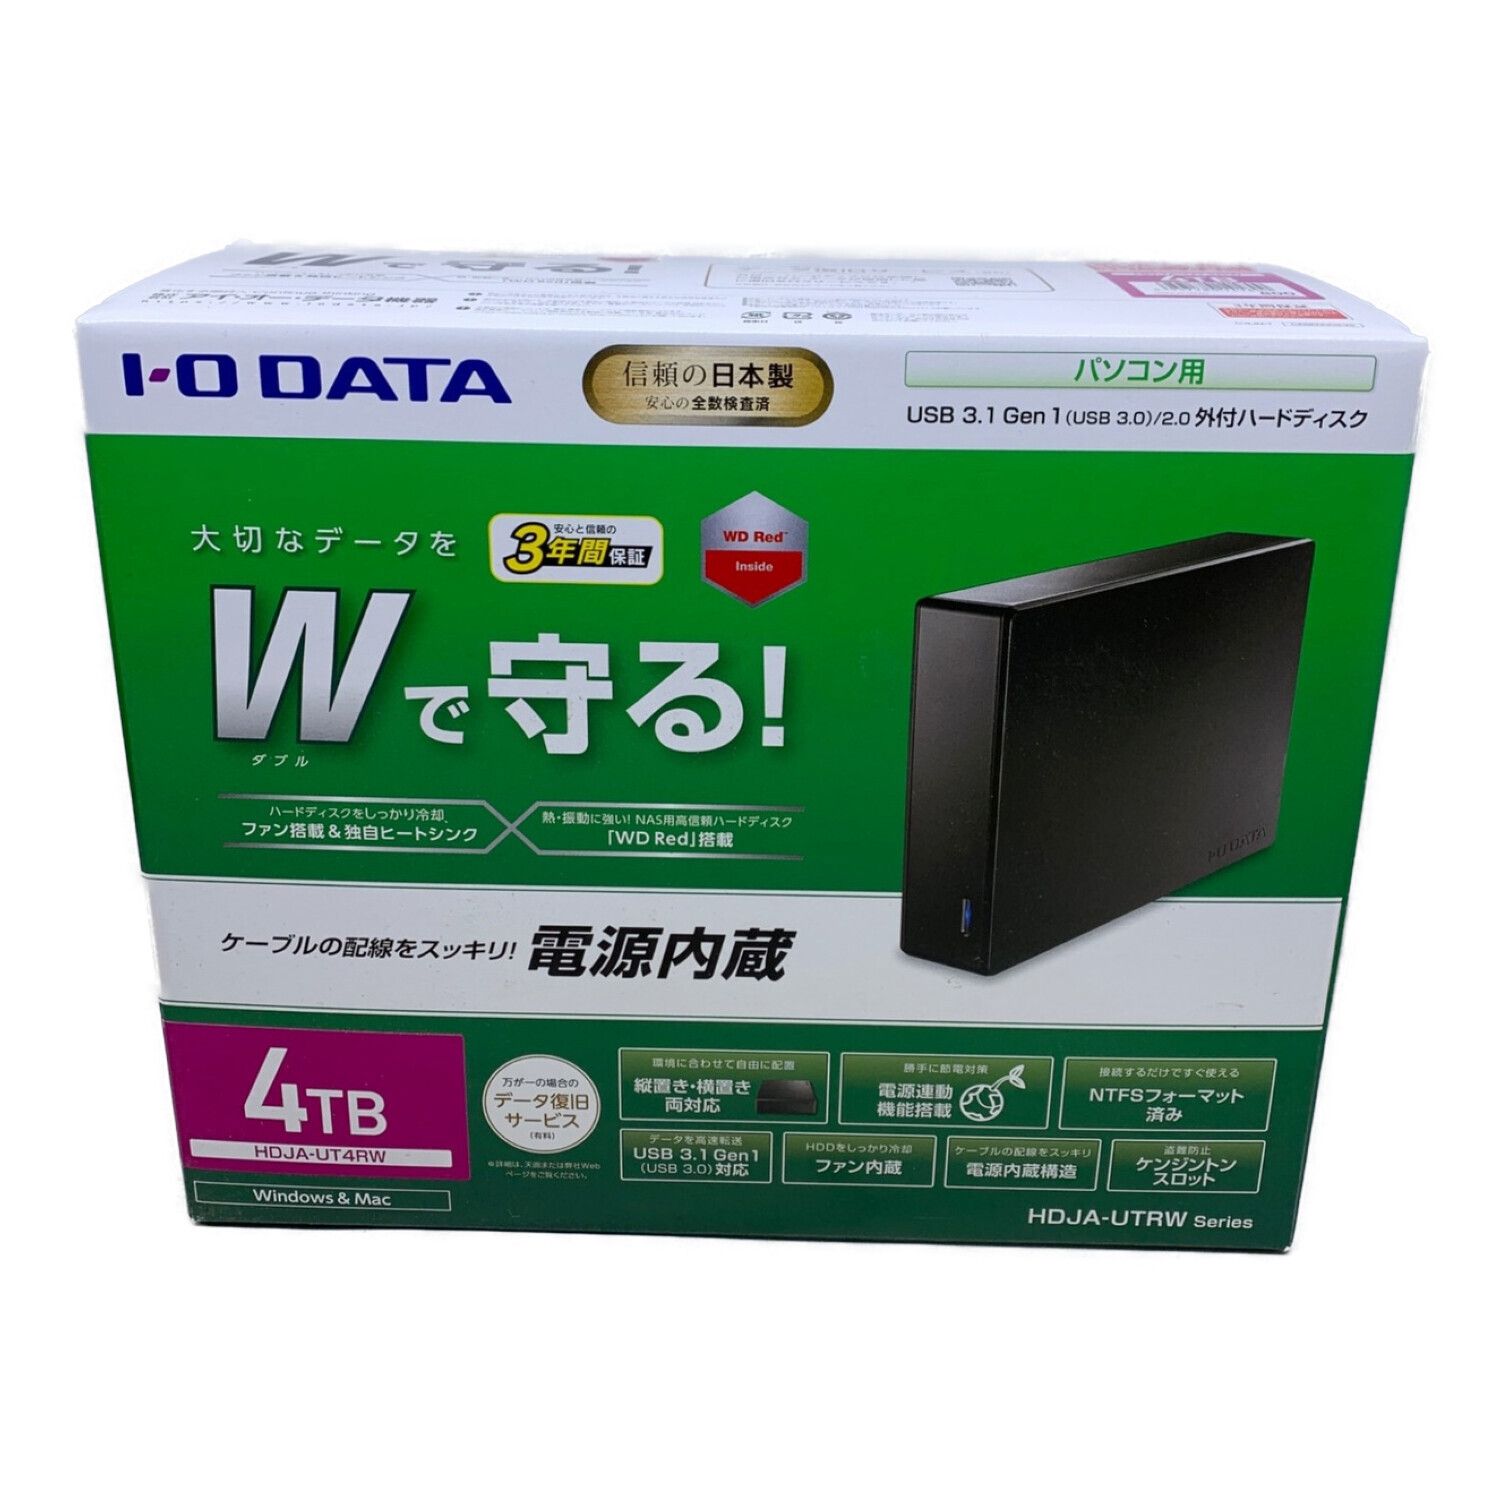 IODATA (アイオーデータ) 外付ハードディスク USB 3.1 Gen 1 4TB HDJA ...